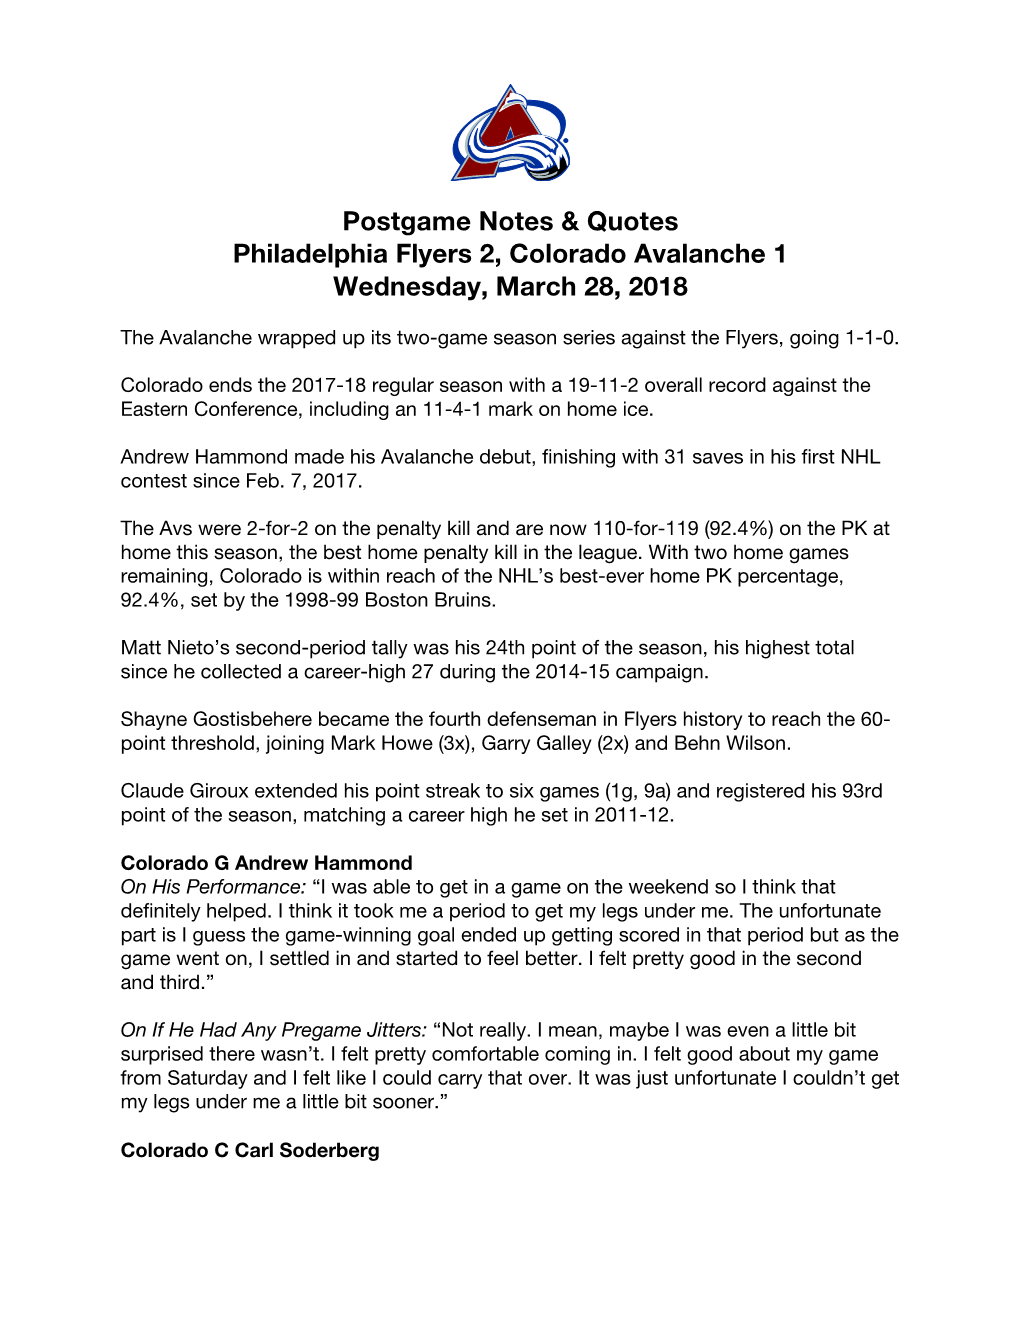 Postgame Notes & Quotes Philadelphia Flyers 2, Colorado